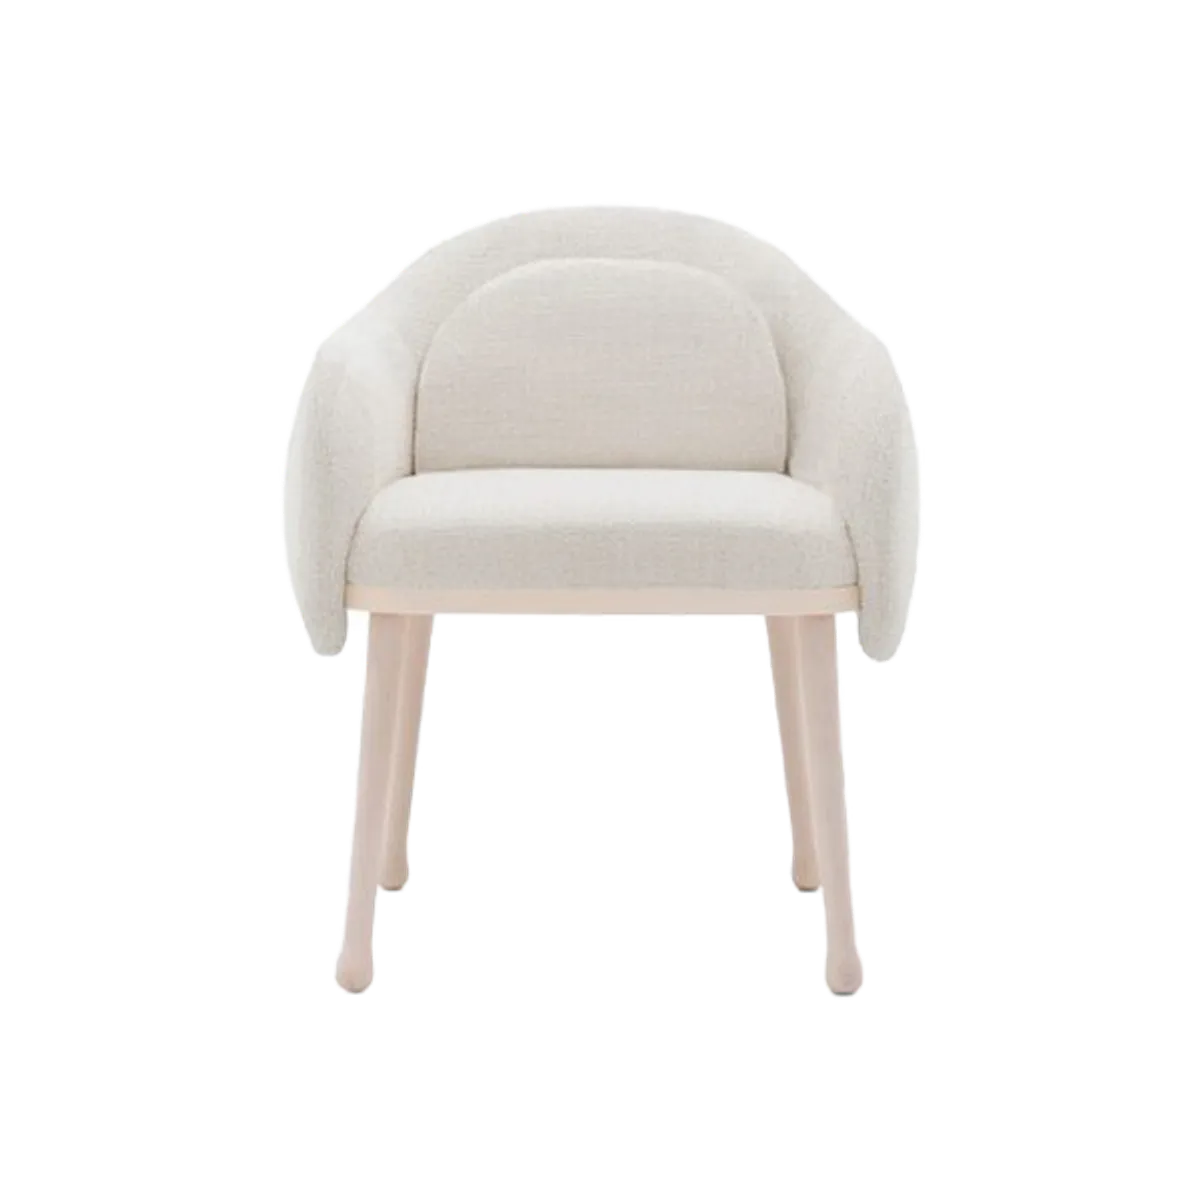 Corolla chair Insideoutcontracts